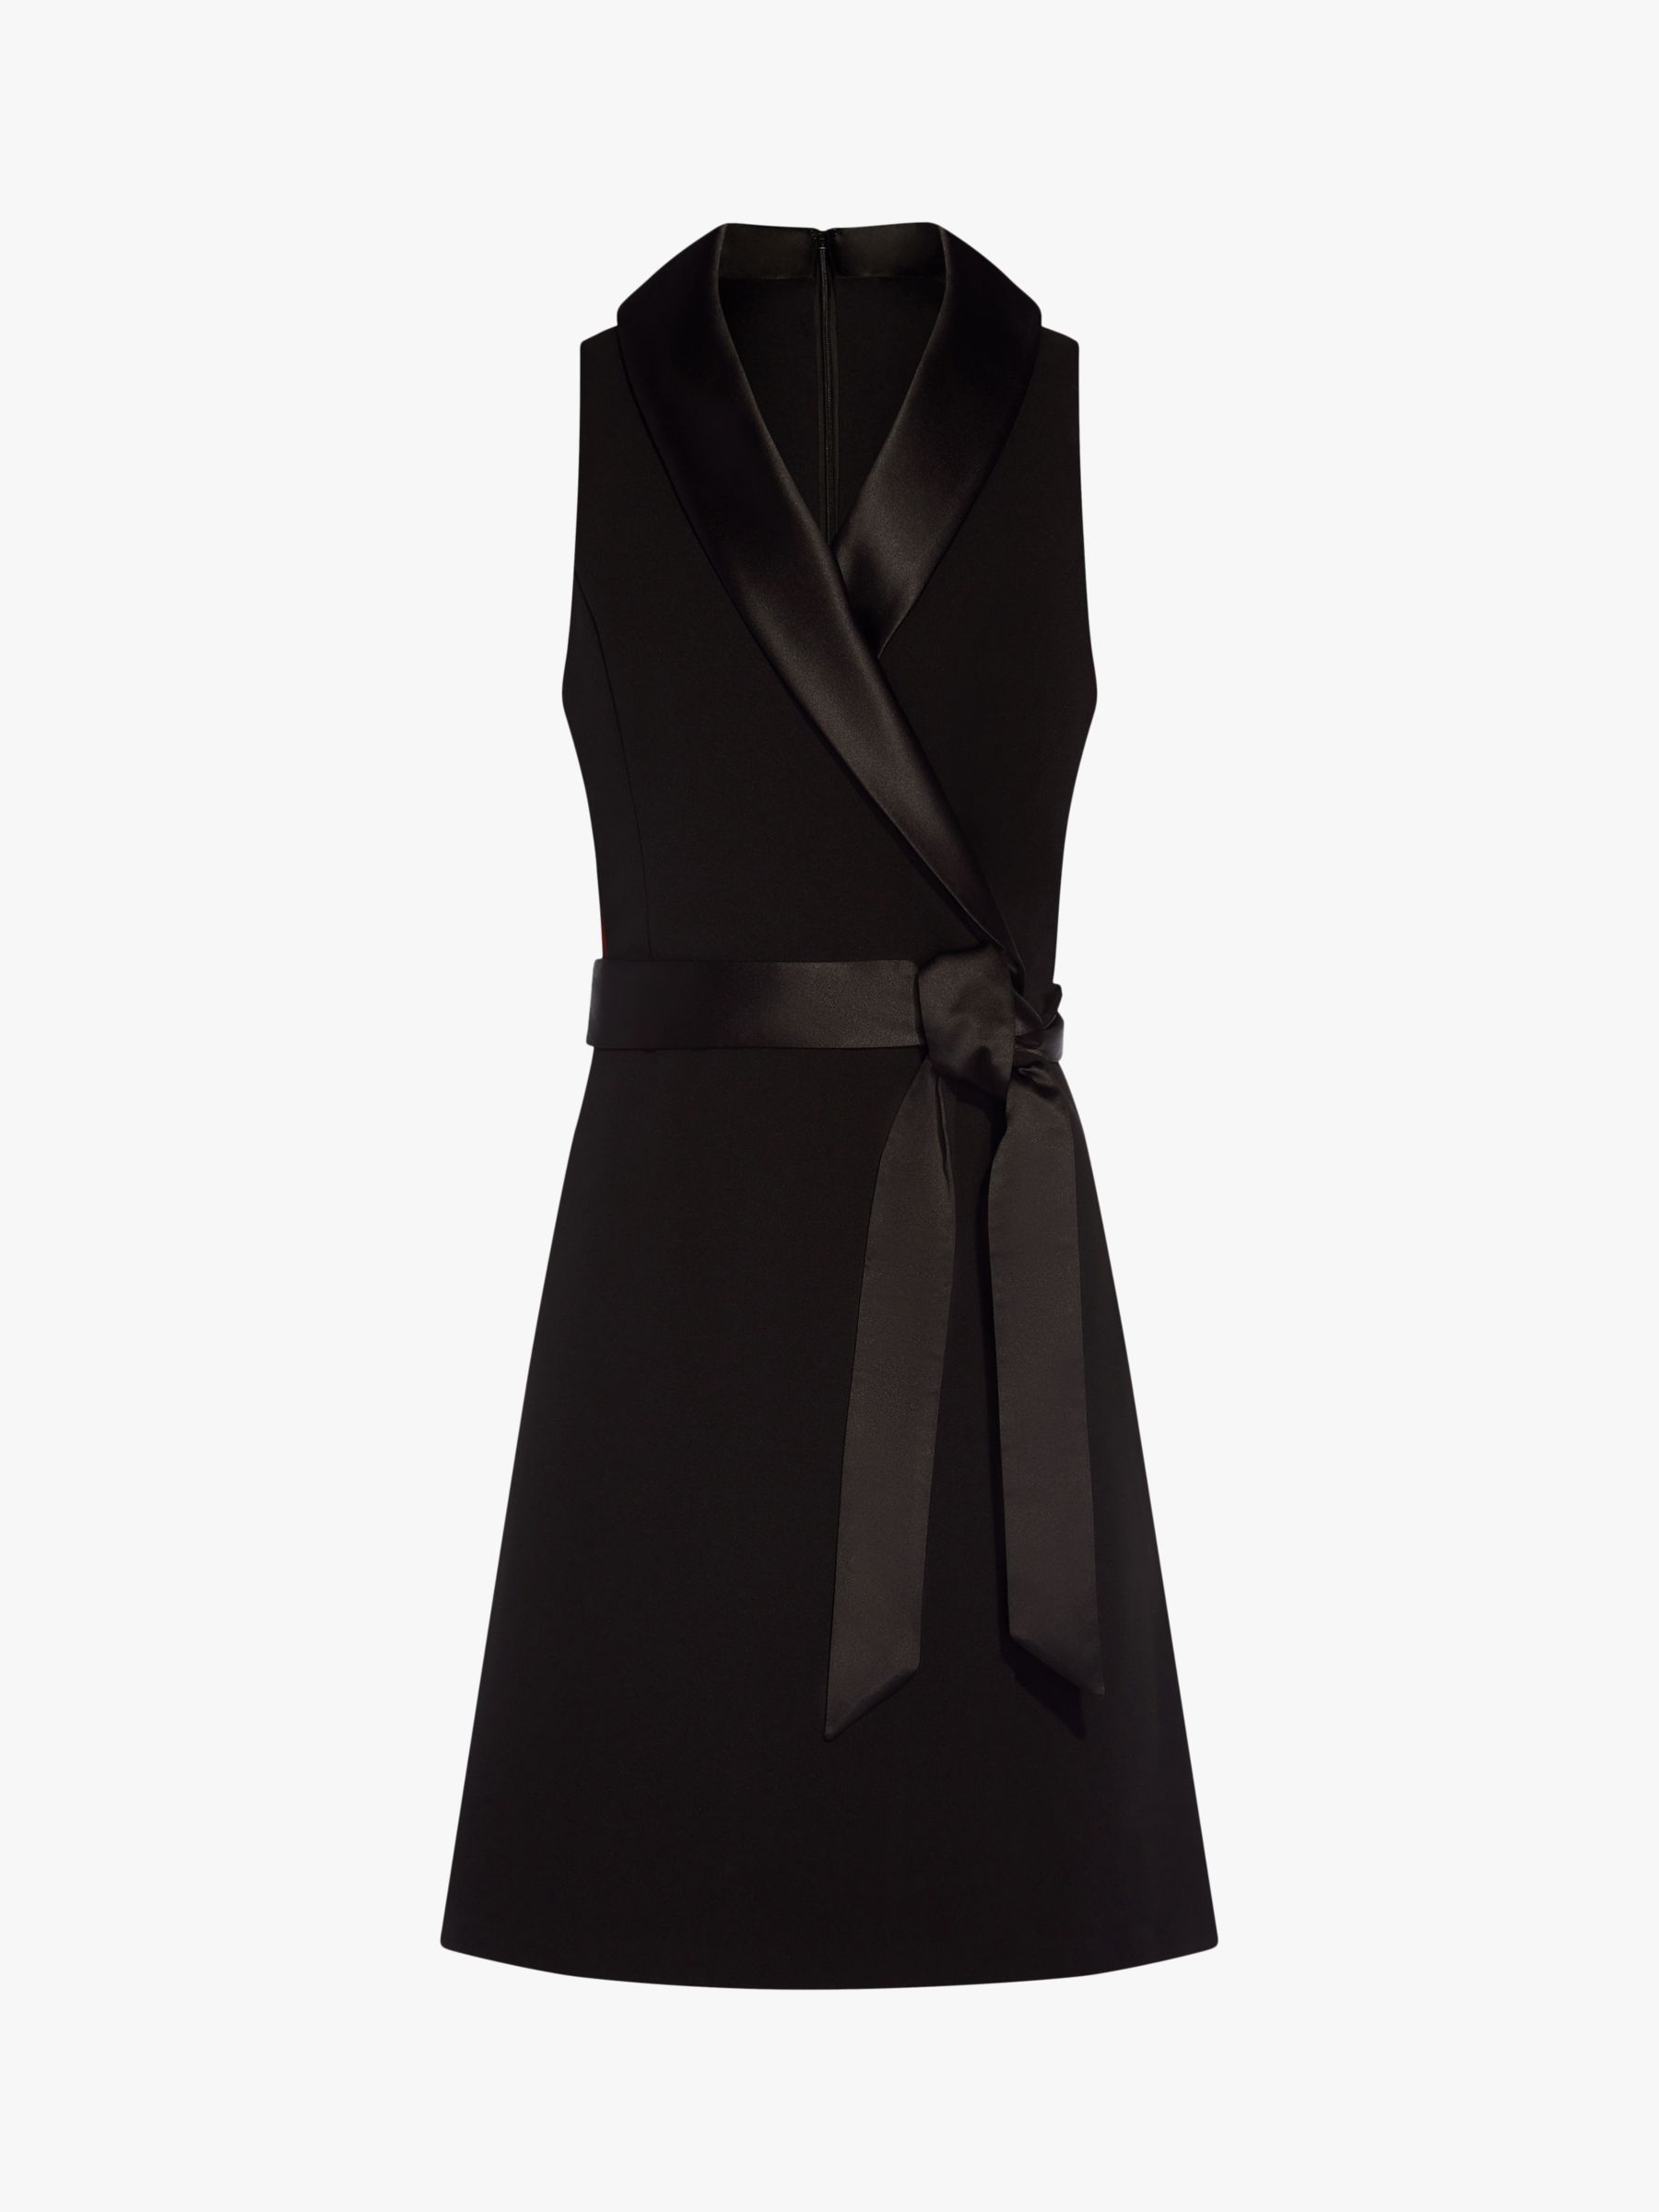 Adrianna Papell Crepe Tuxedo Dress, Black at John Lewis & Partners